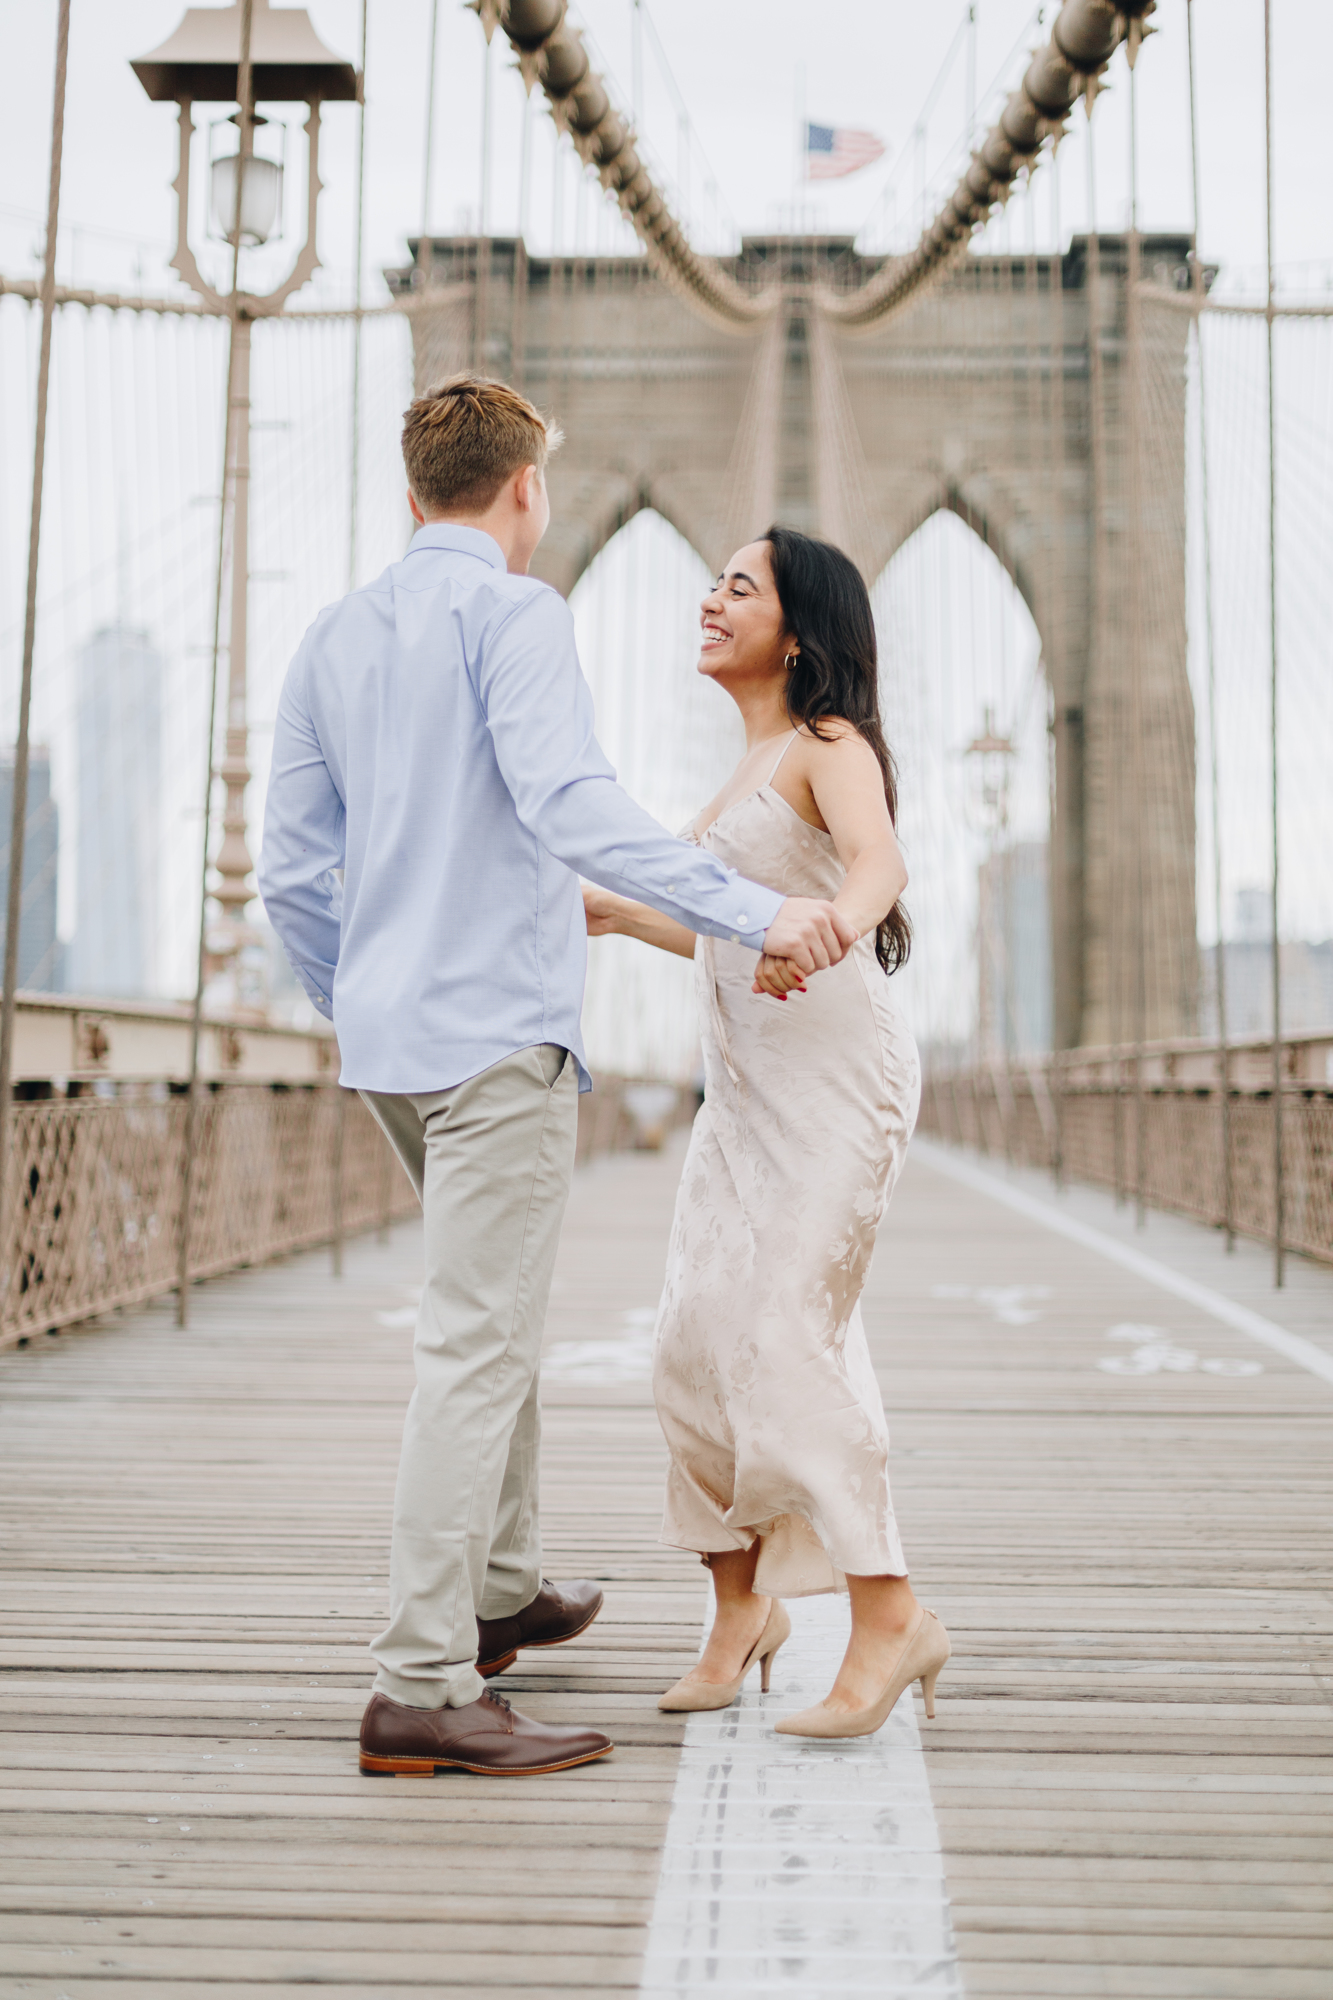 Fantastic Summertime Brooklyn Bridge Engagement Photos